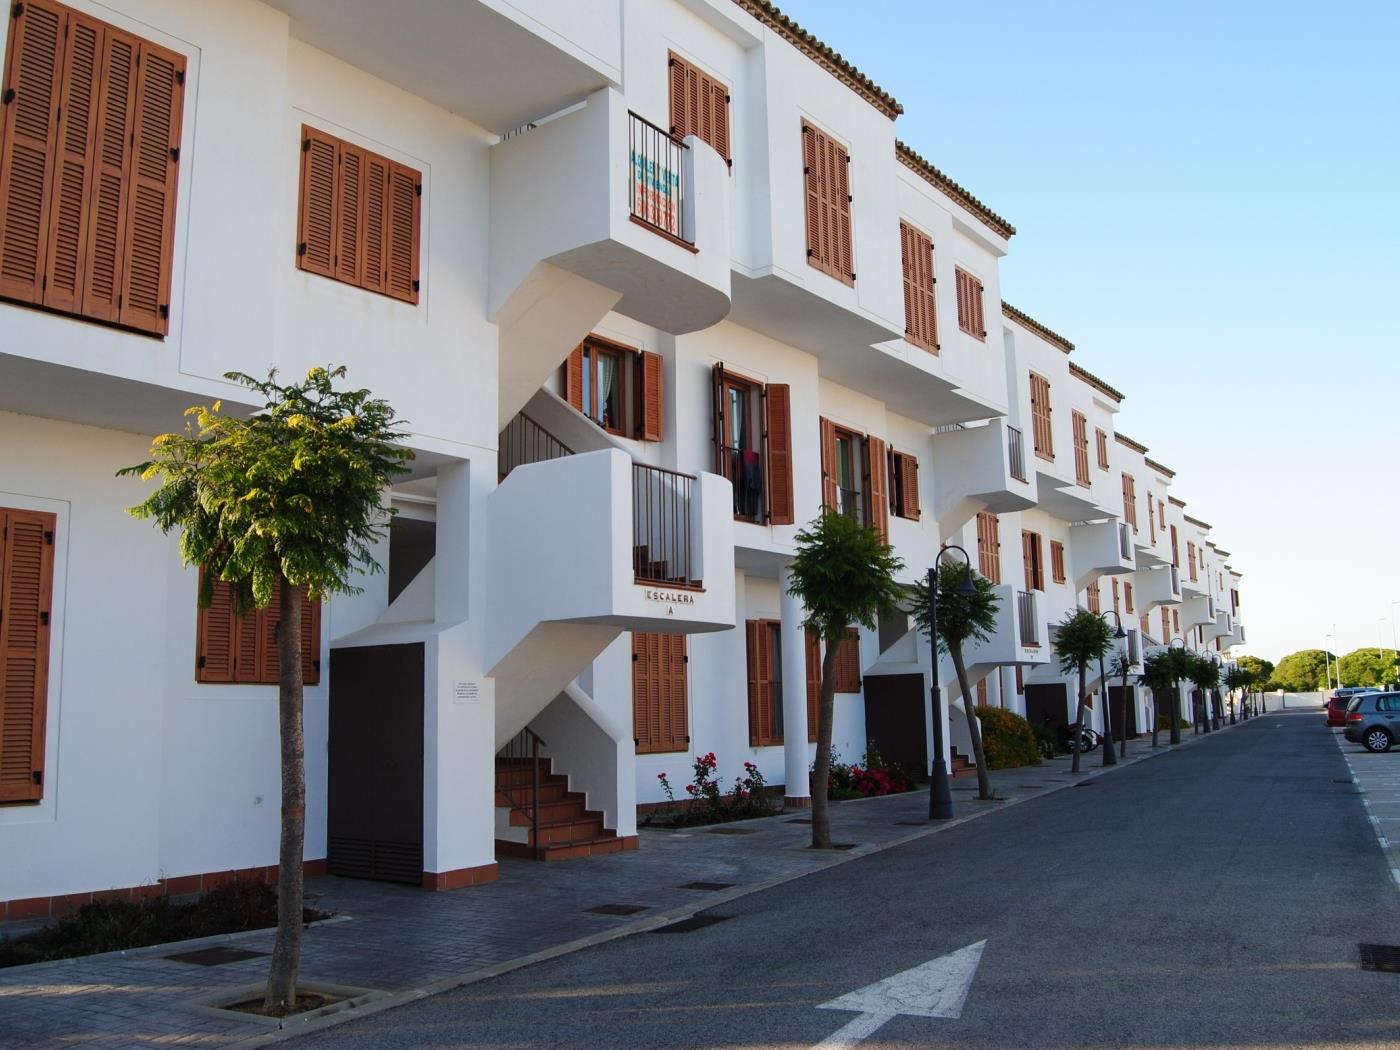 Ref b2. Two-bedroom apartment on the ground floor in Chiclana de la Frontera